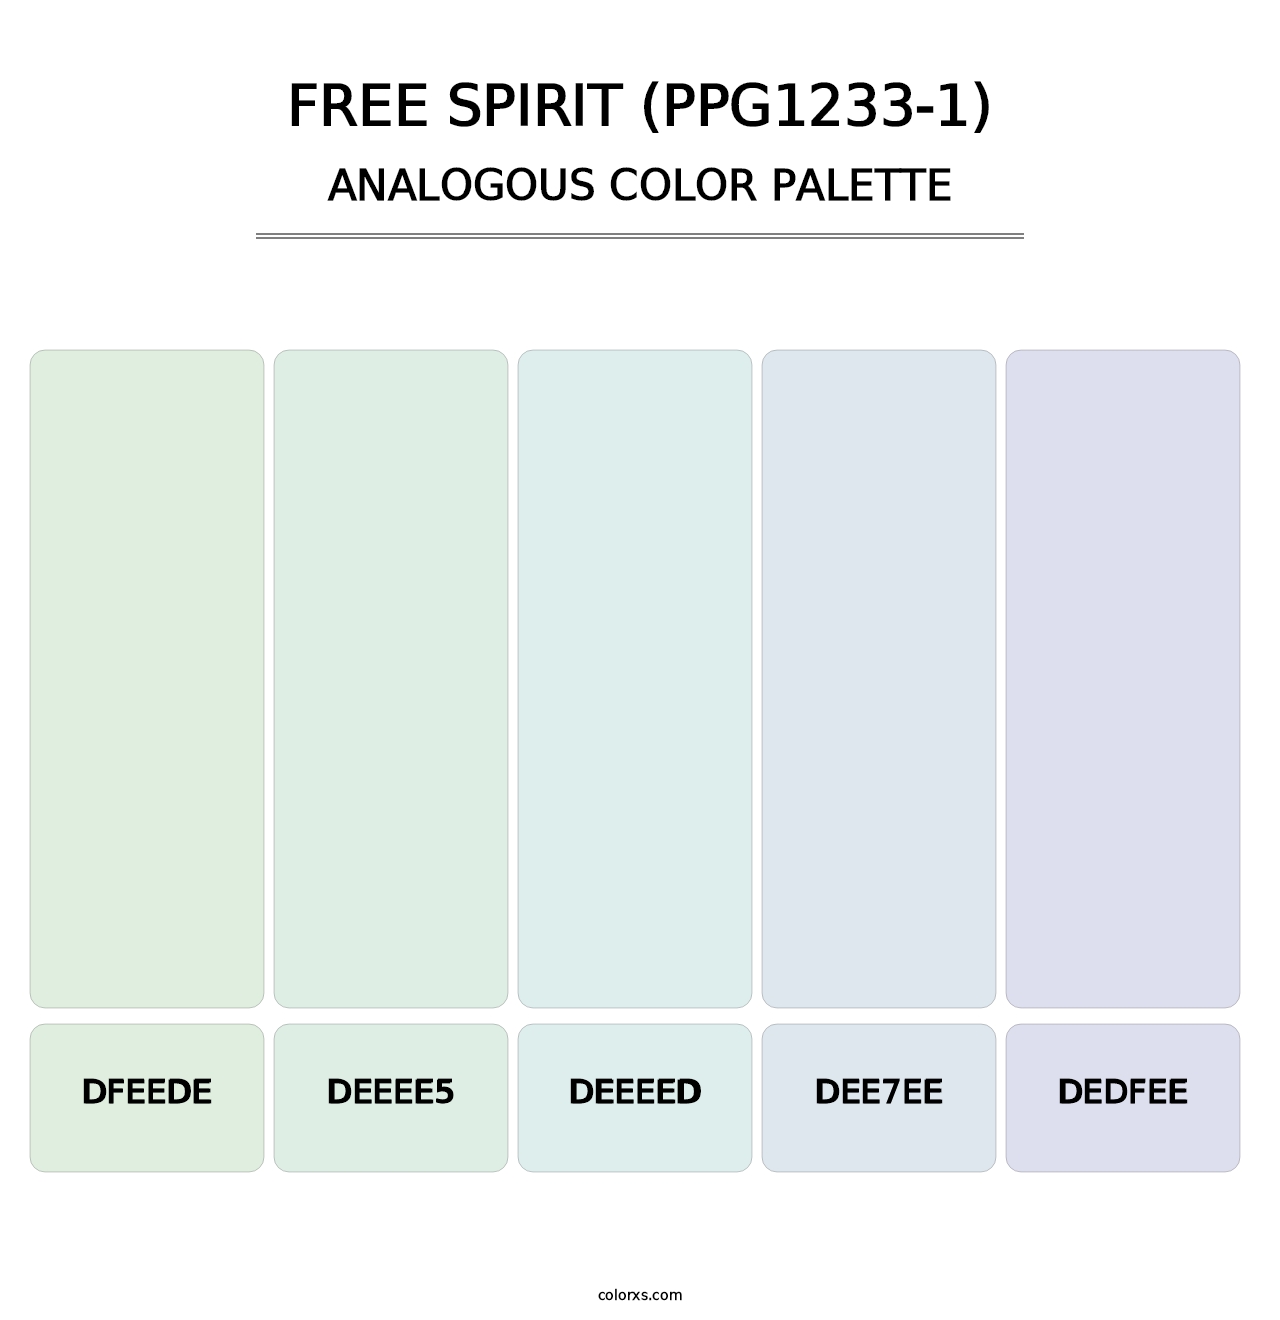 Free Spirit (PPG1233-1) - Analogous Color Palette